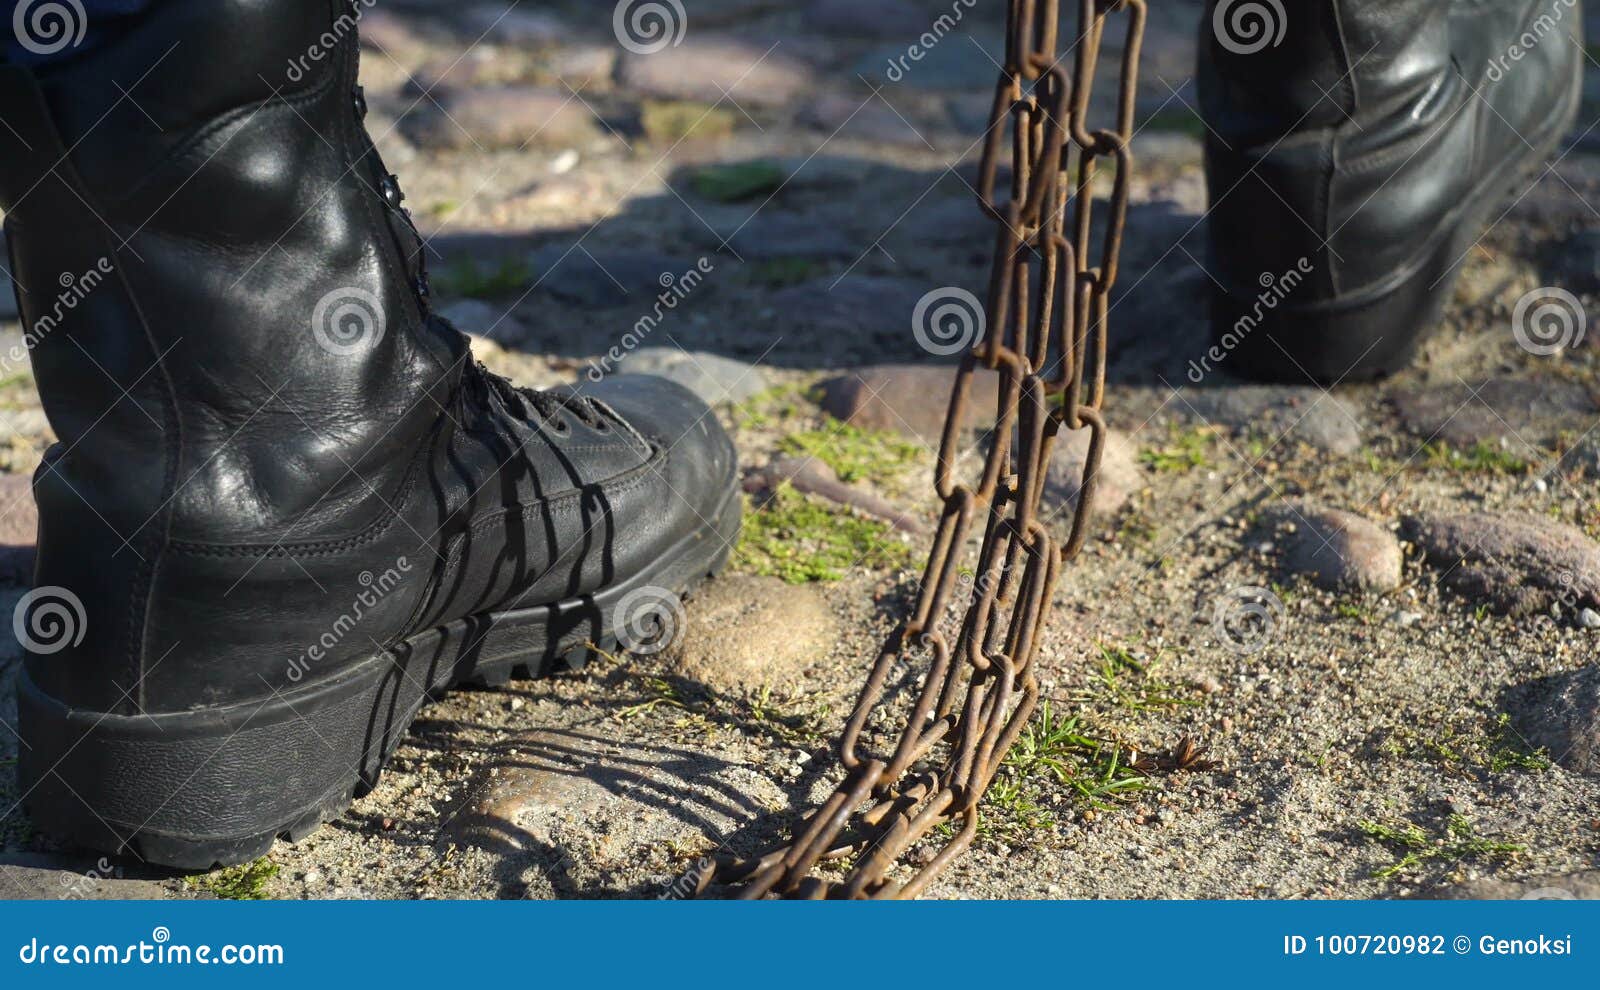 Dirty shoe slave